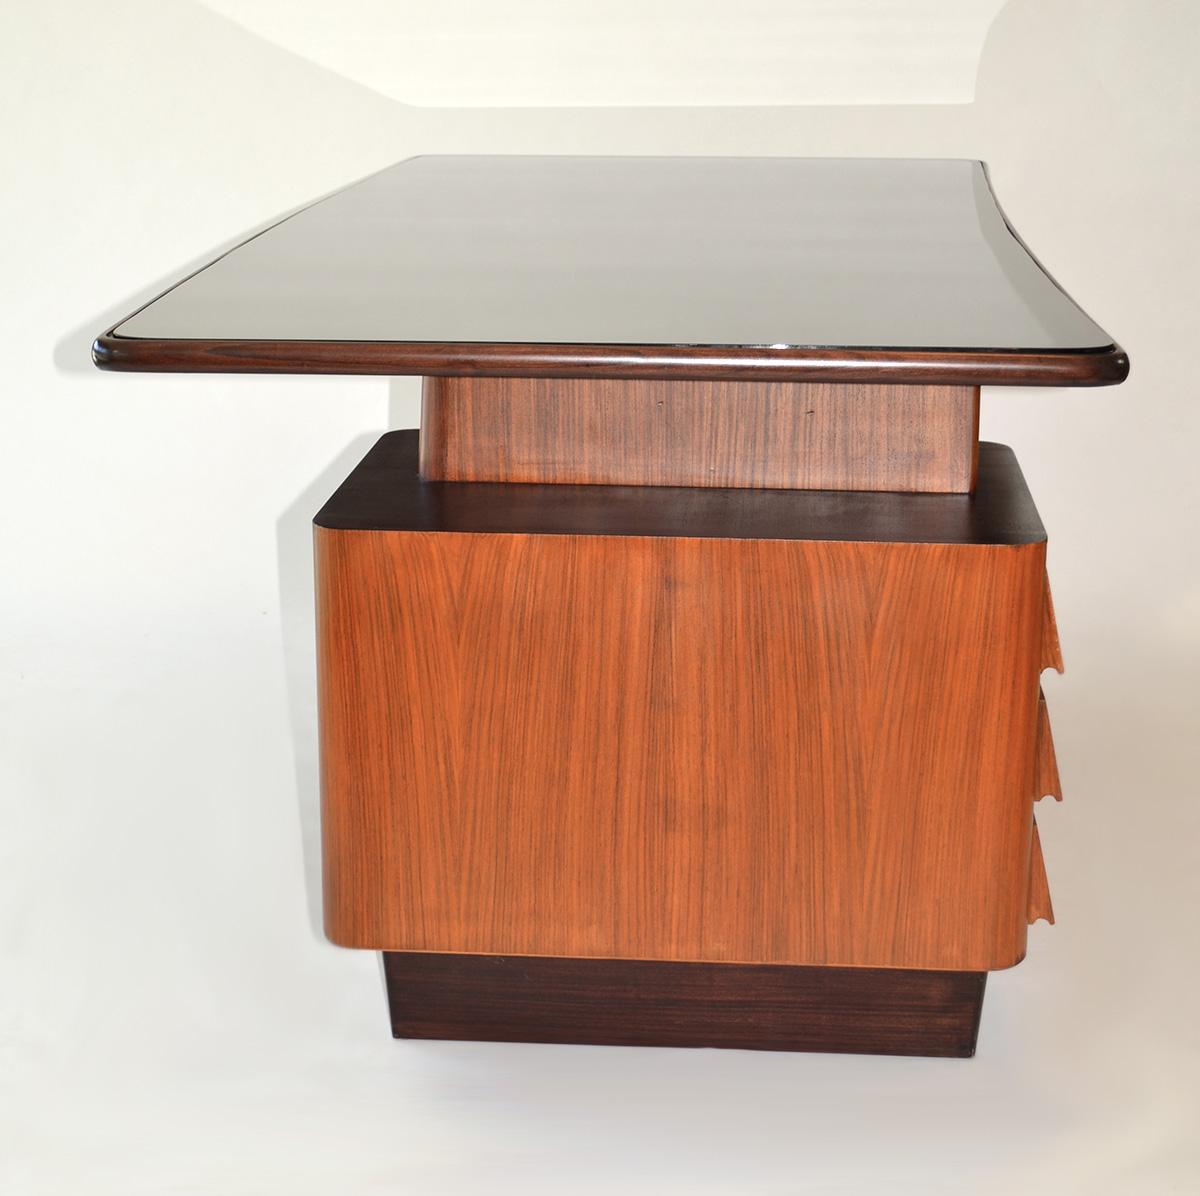 20th Century Italian Modern Desk Attributed to Gio Ponti, 1950s